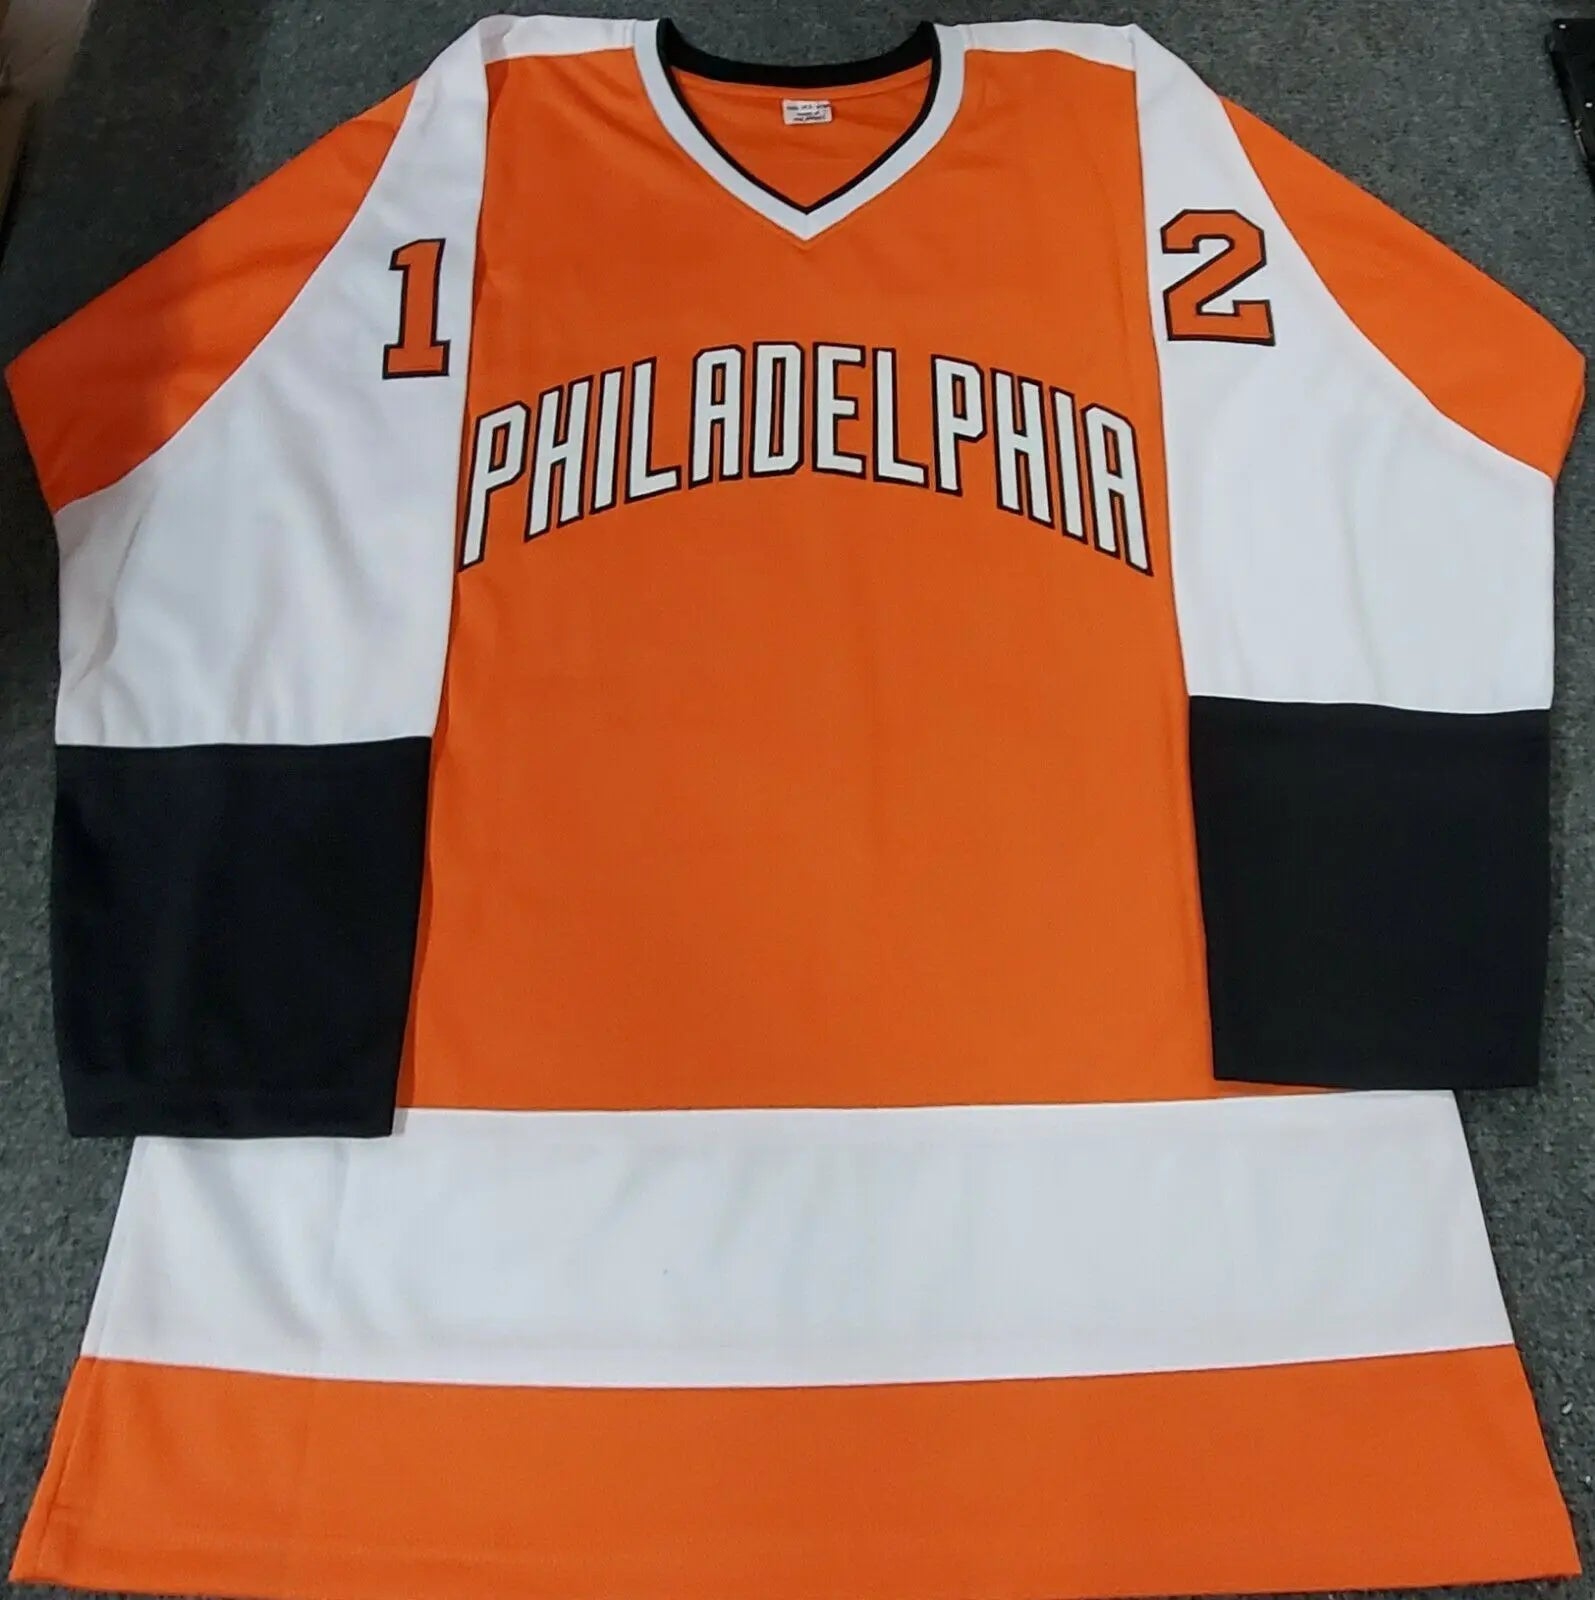 Philadelphia Flyers Tim Kerr Autographed Signed Jersey Jsa Coa – MVP  Authentics